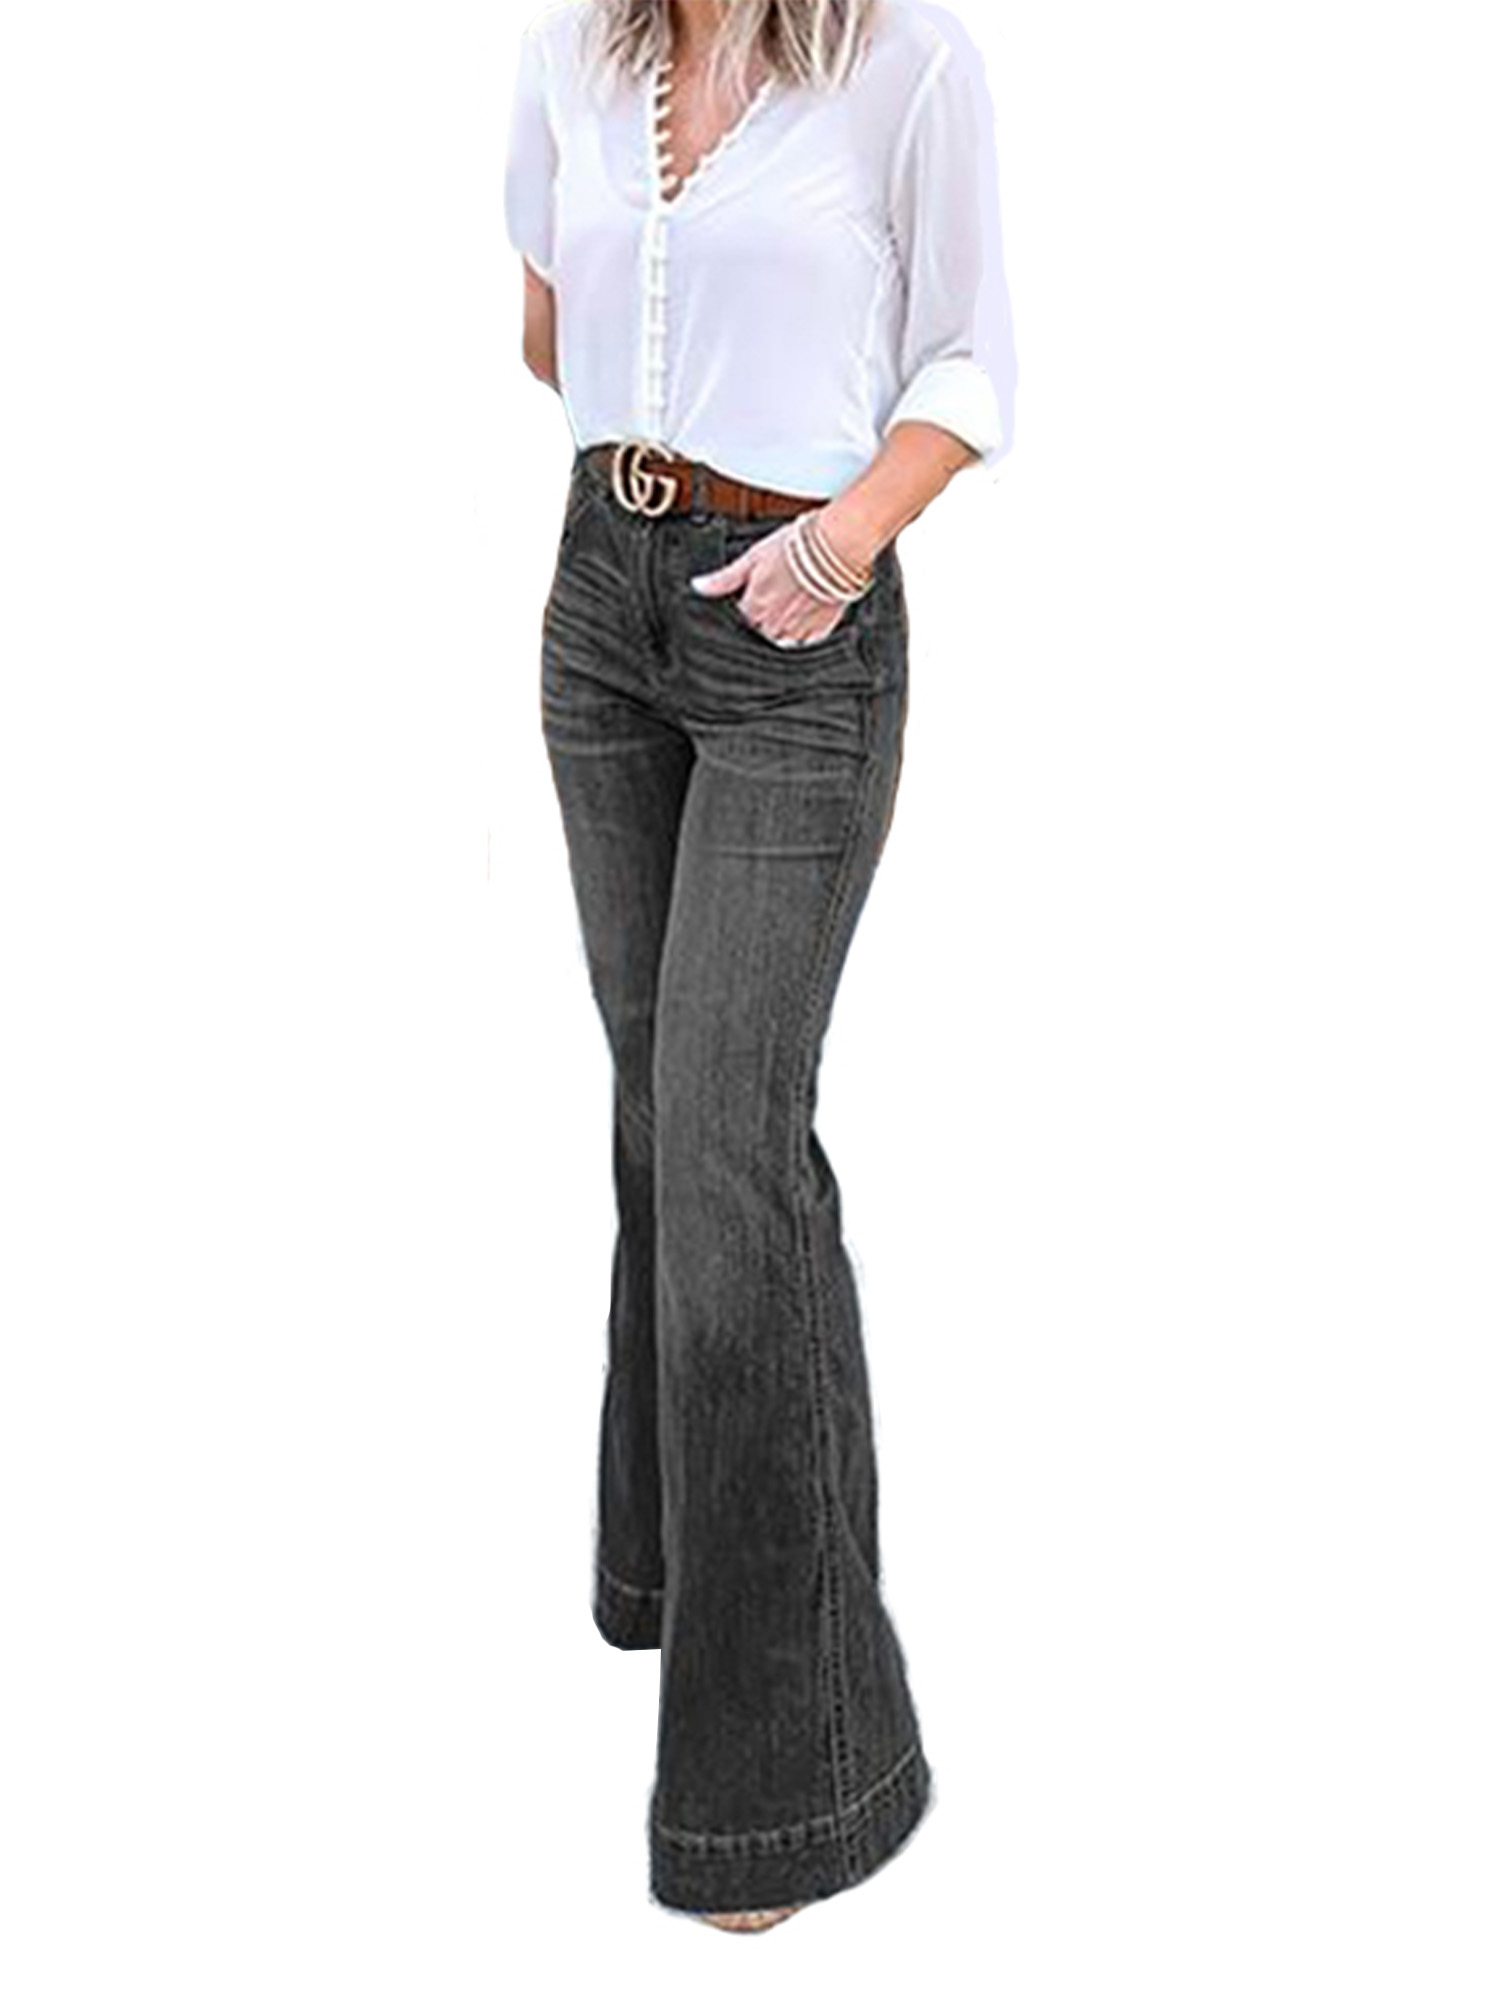 Avamo Women Flare Jeans Stretch Bootcut Denim Pants Jeggings Female High Waist Denim Jeans Skinny Slim Retro Jeans - image 1 of 2